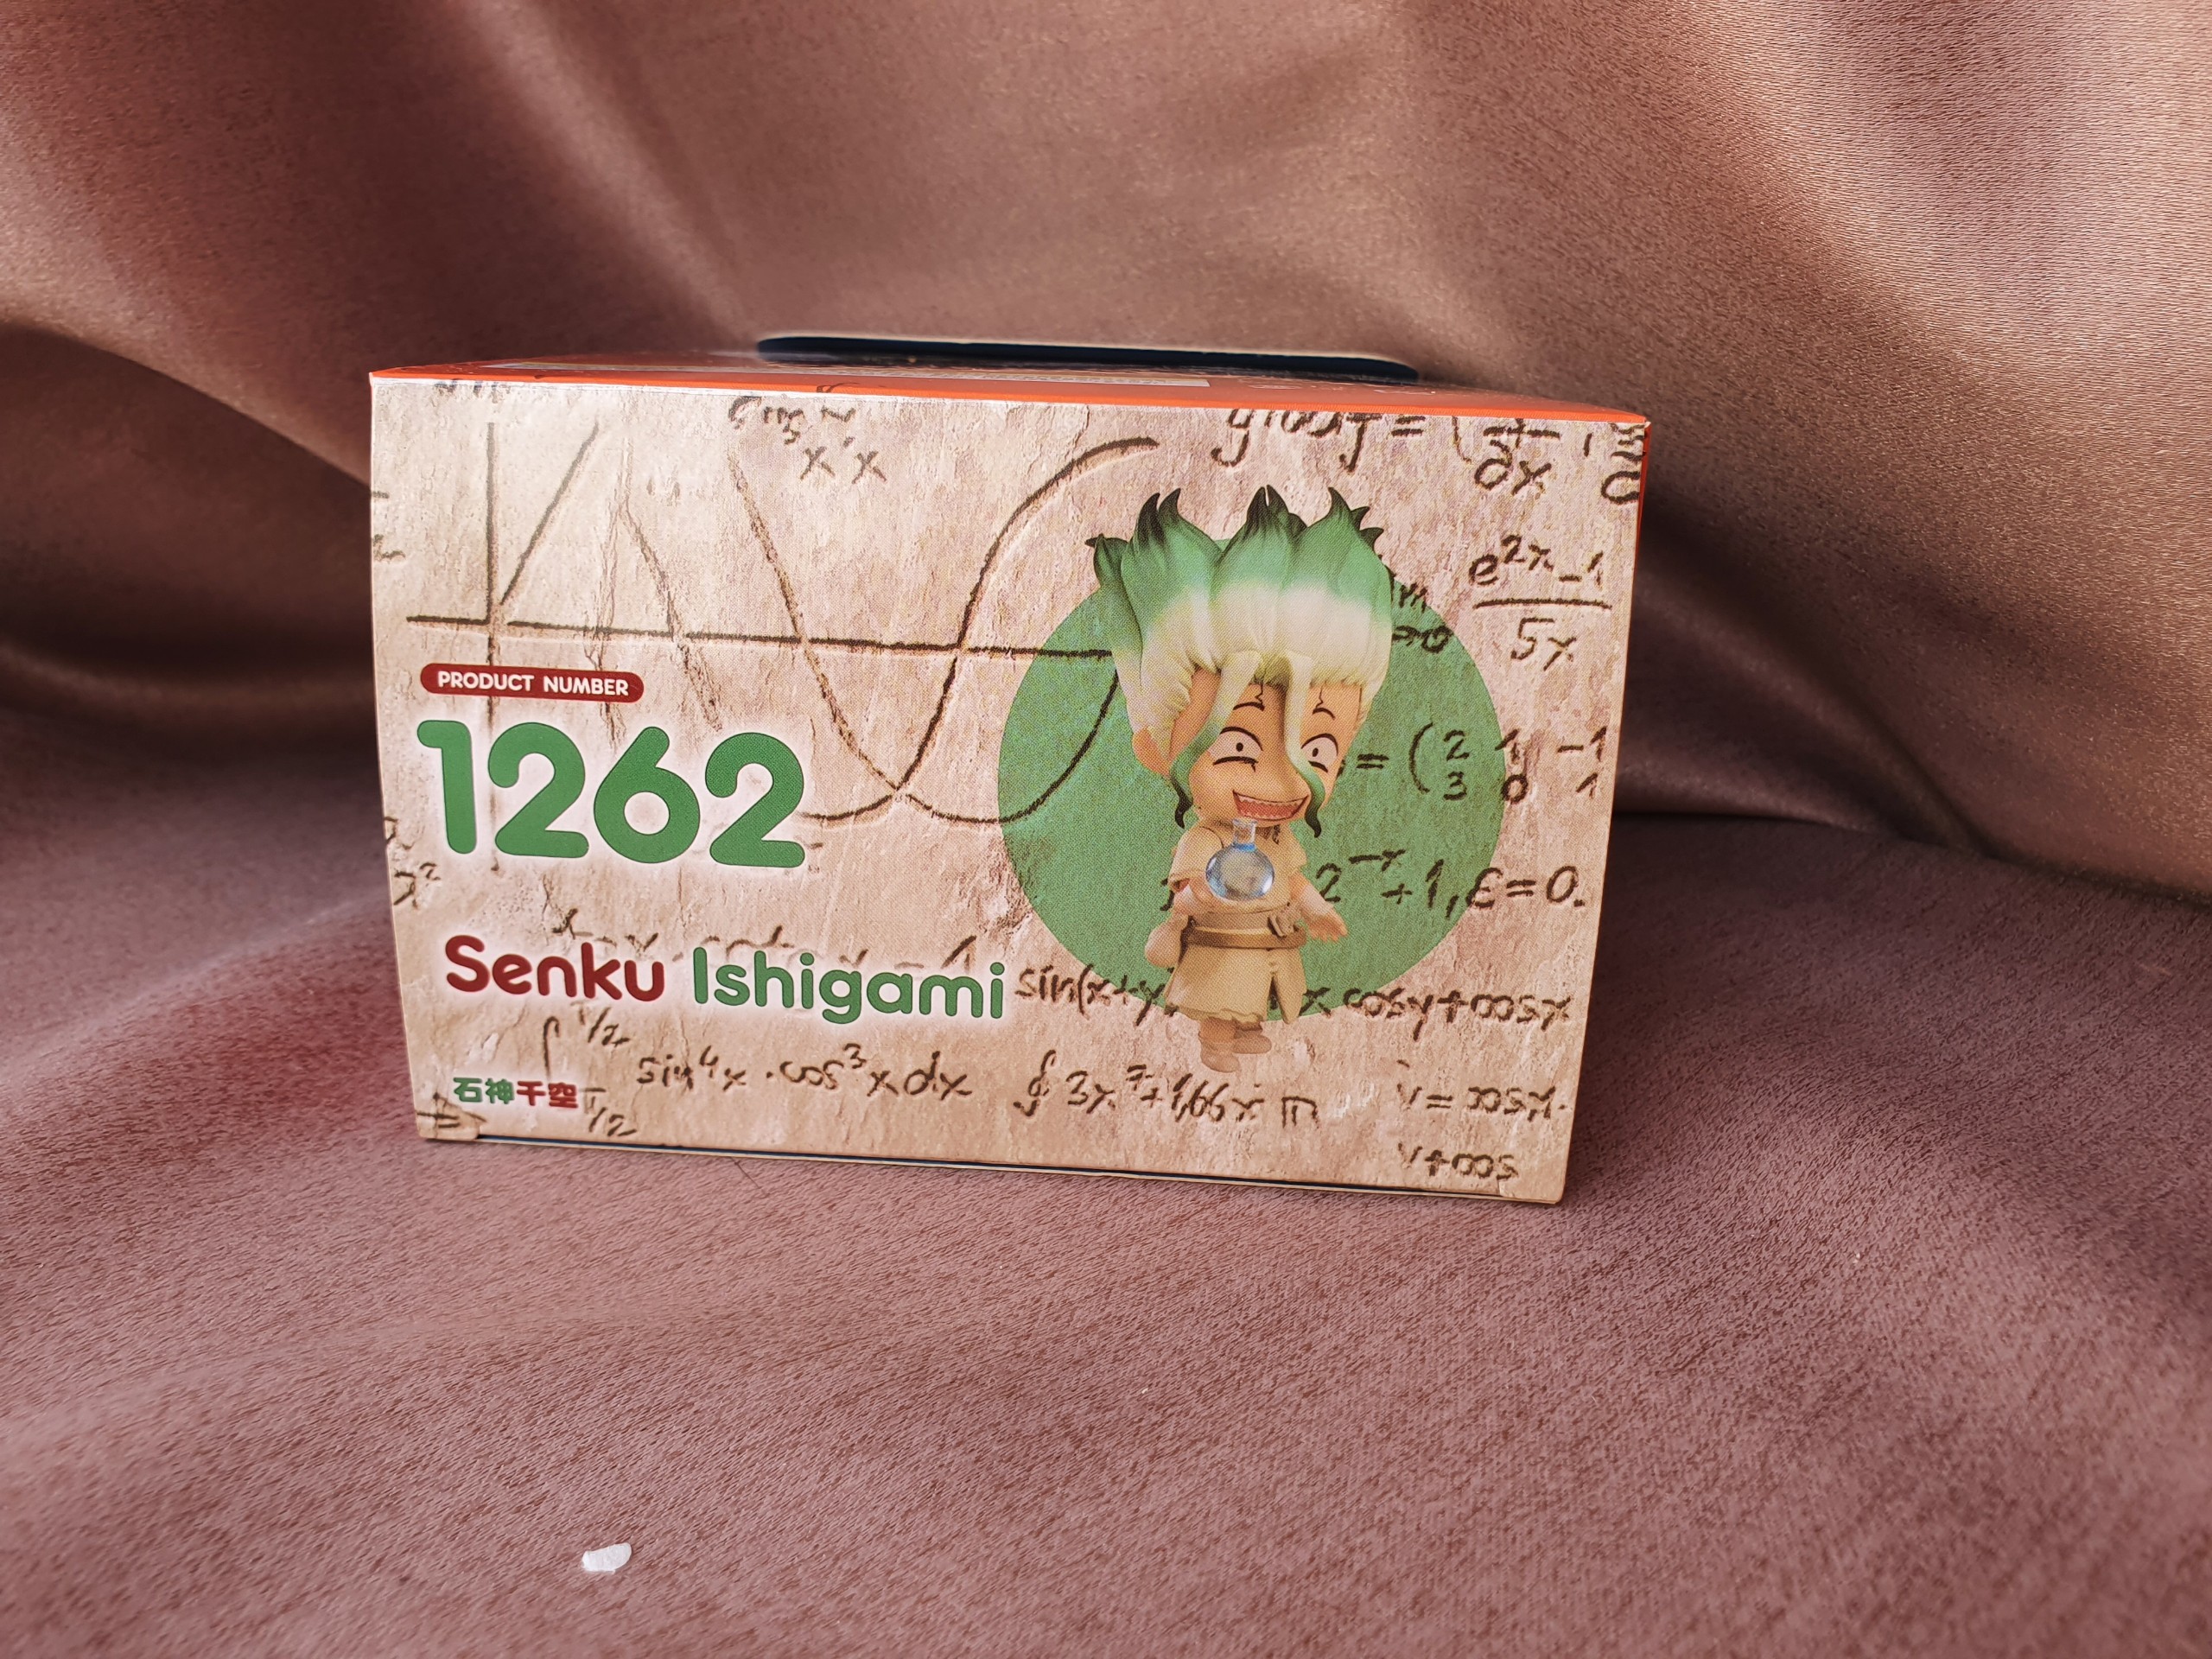 Mô Hình Nendoroid 1262 - Senku Ishigami - Dr. STONE